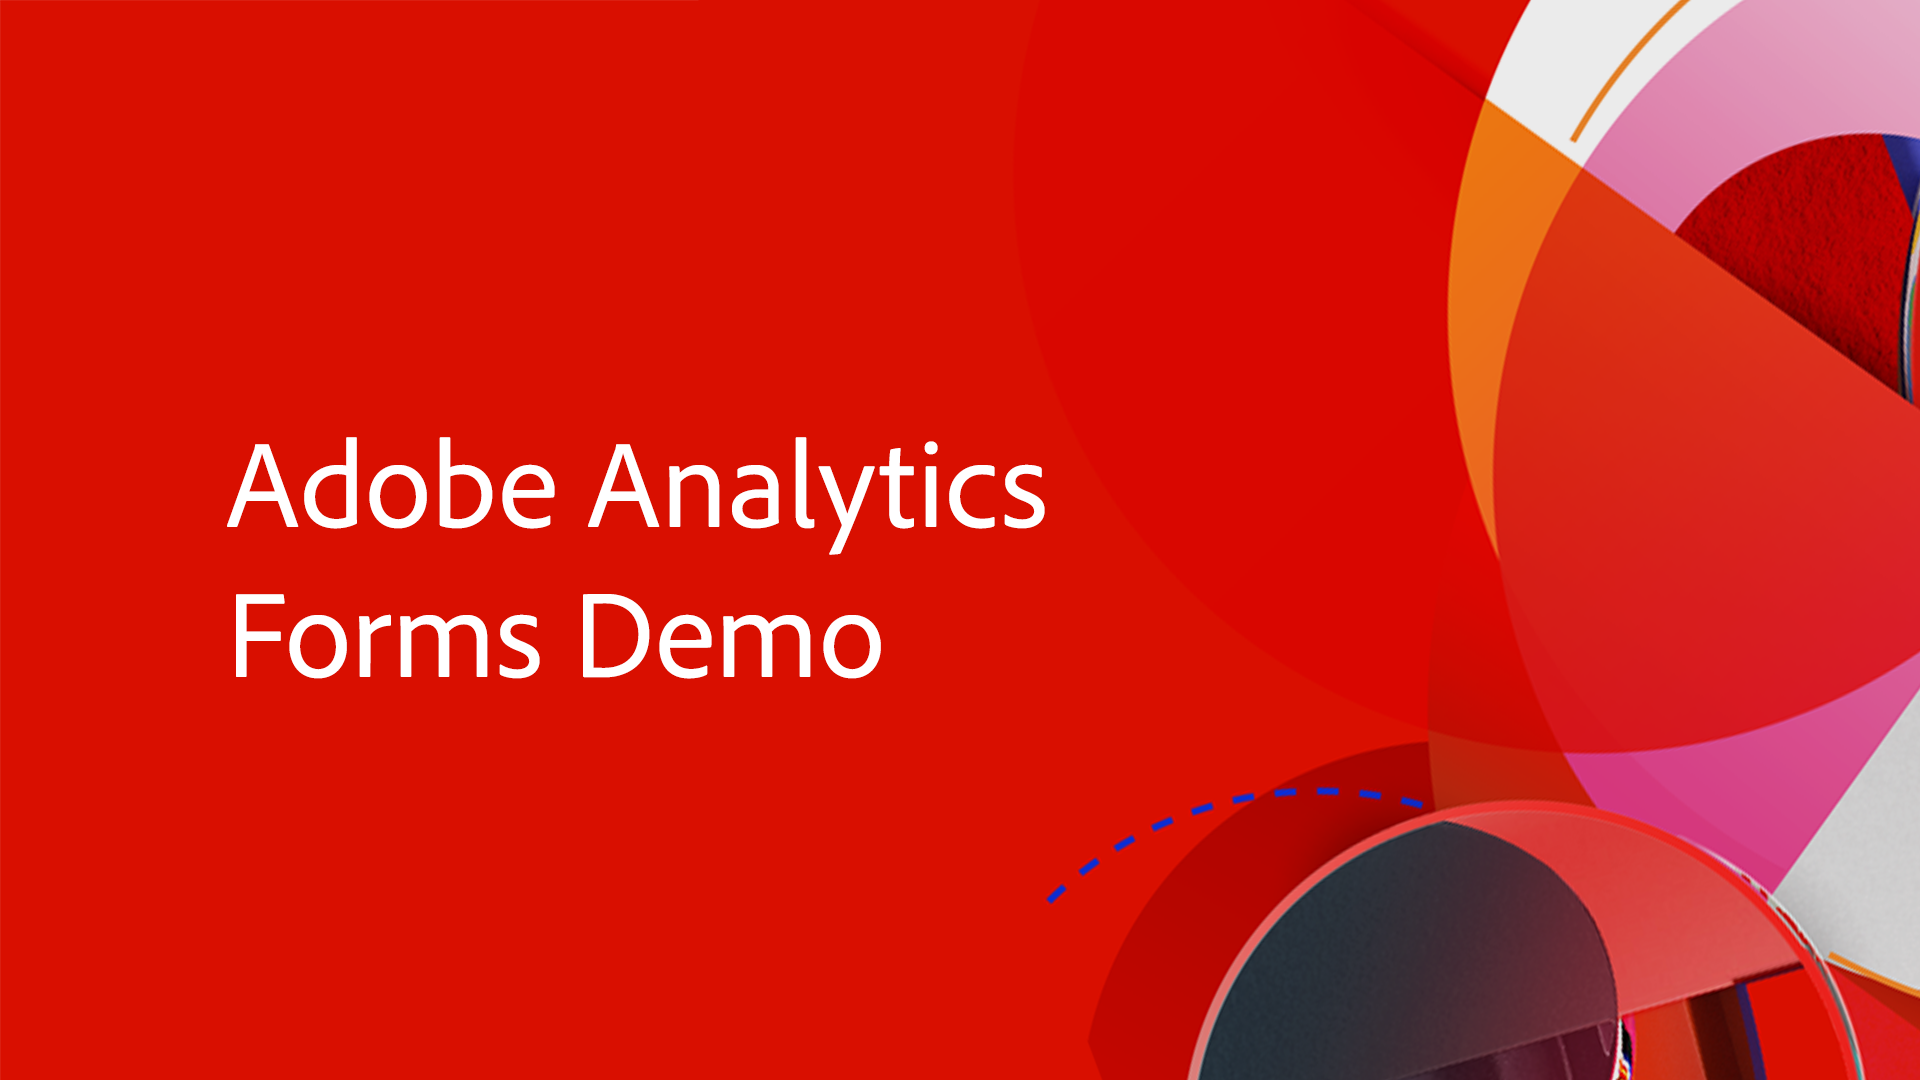 Adobe Analytics Forms Demo